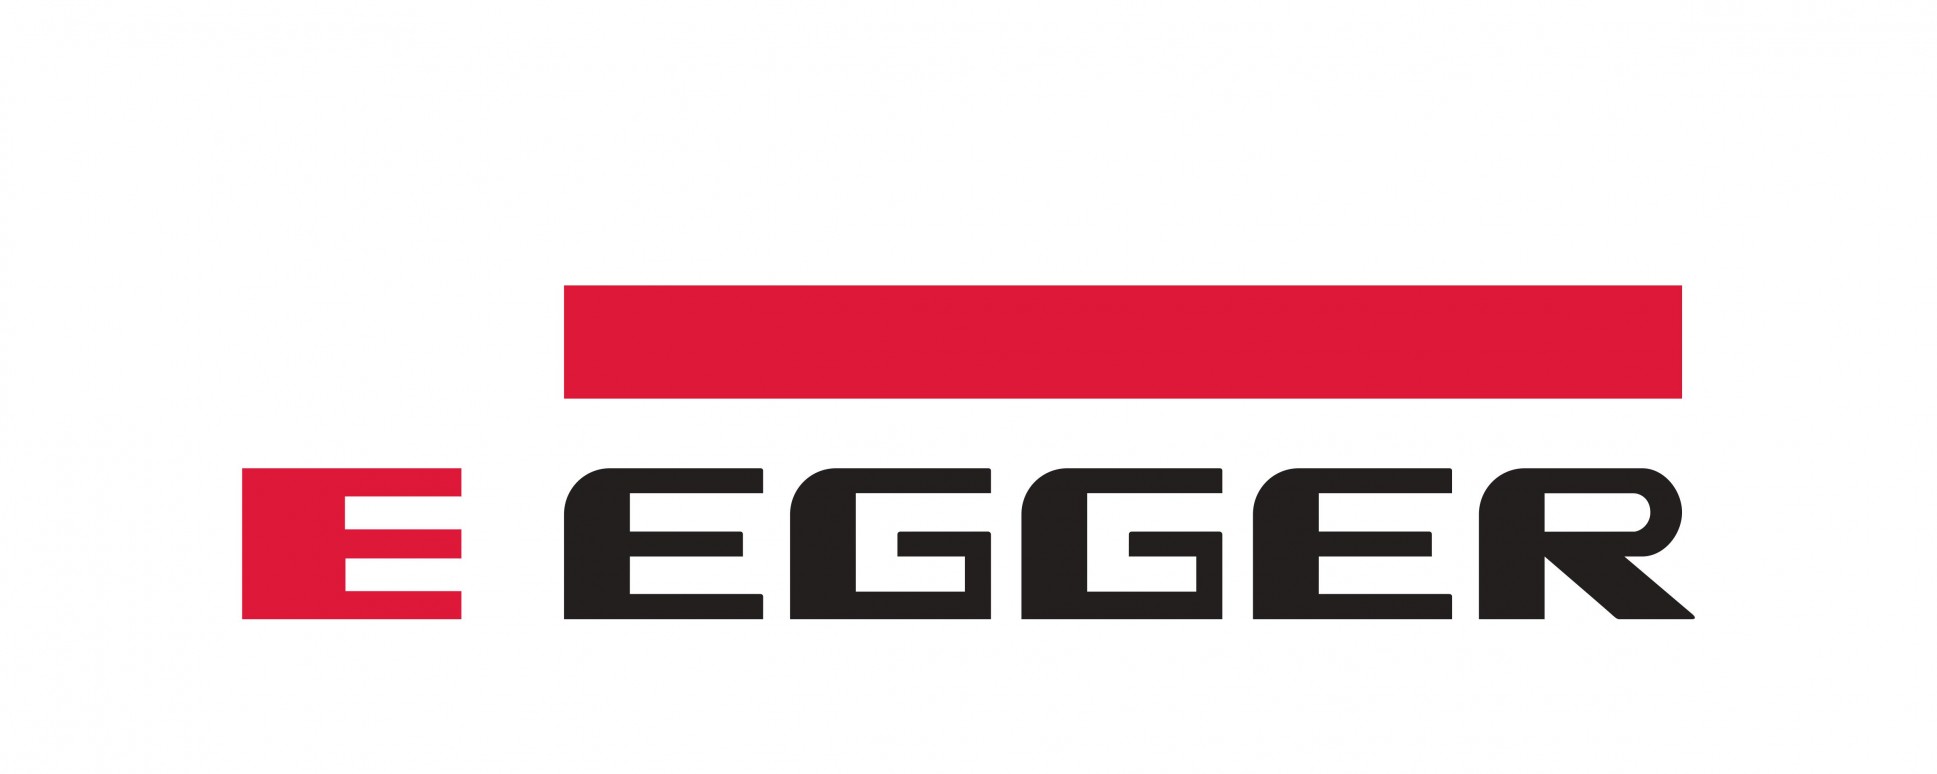 EEGER logo